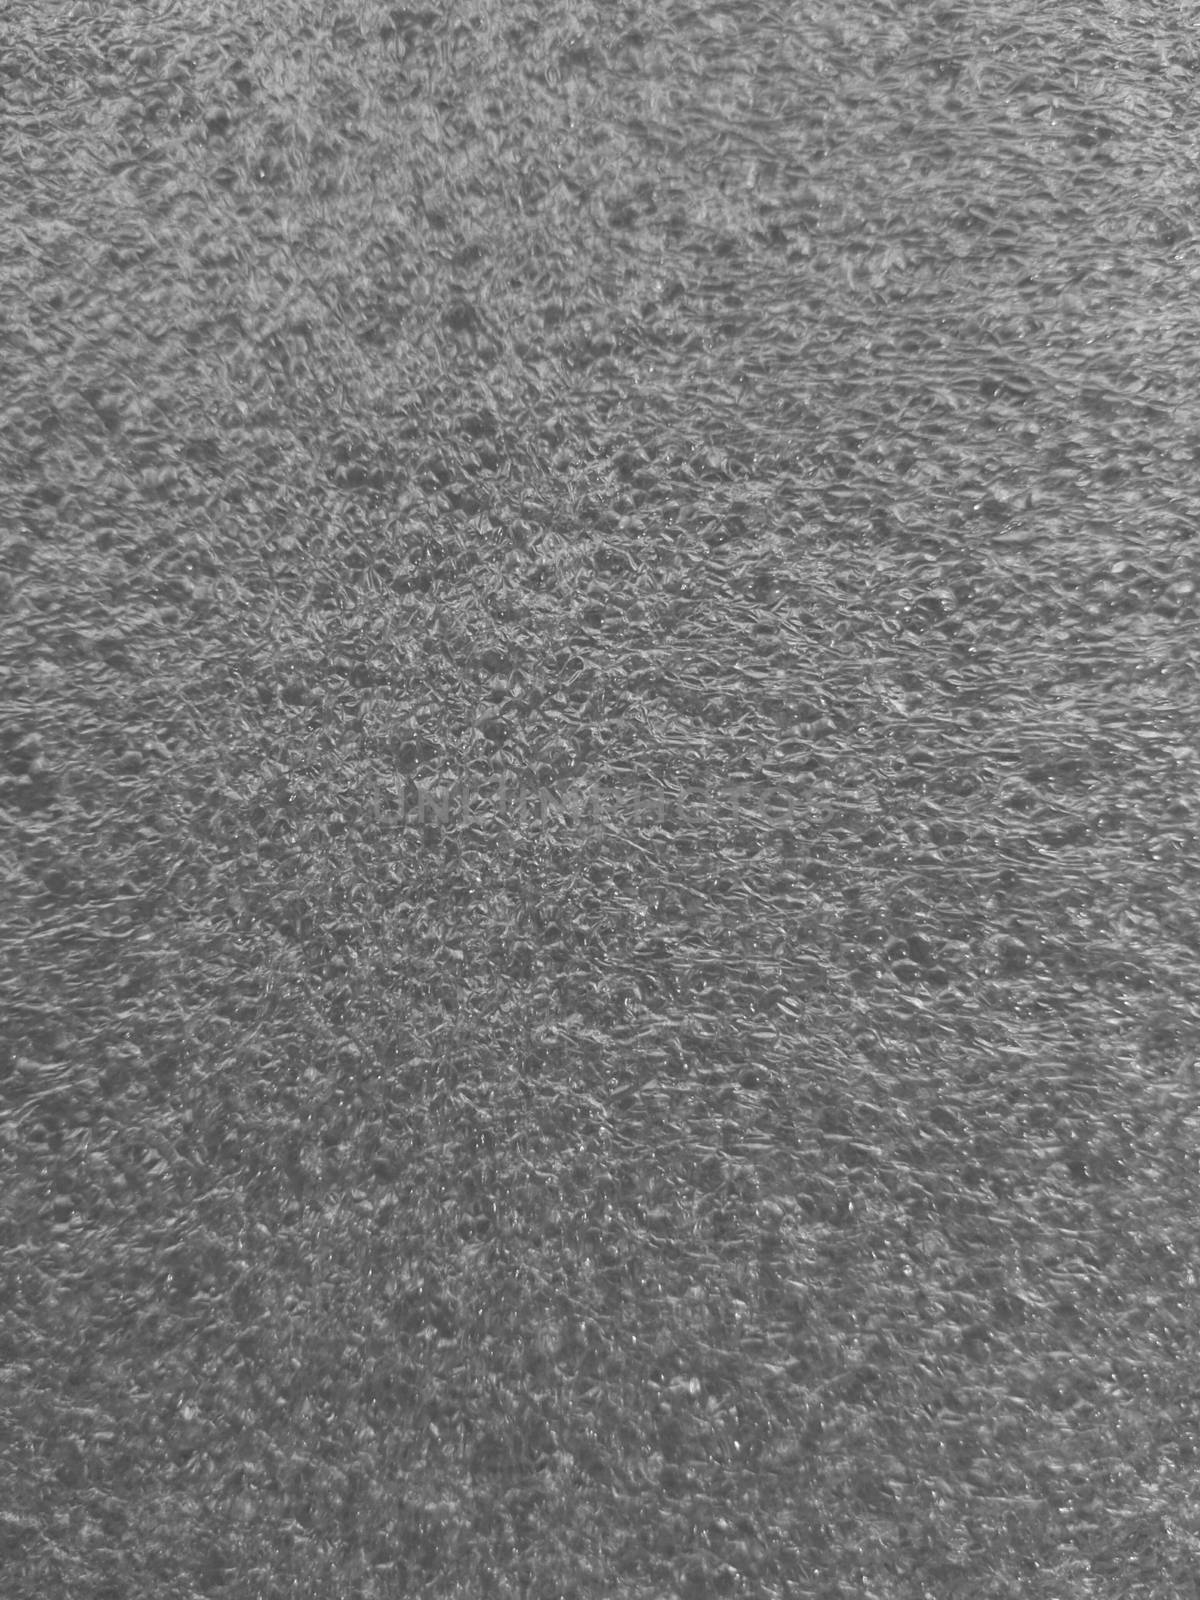 Foam sponge texture background by wattanaphob